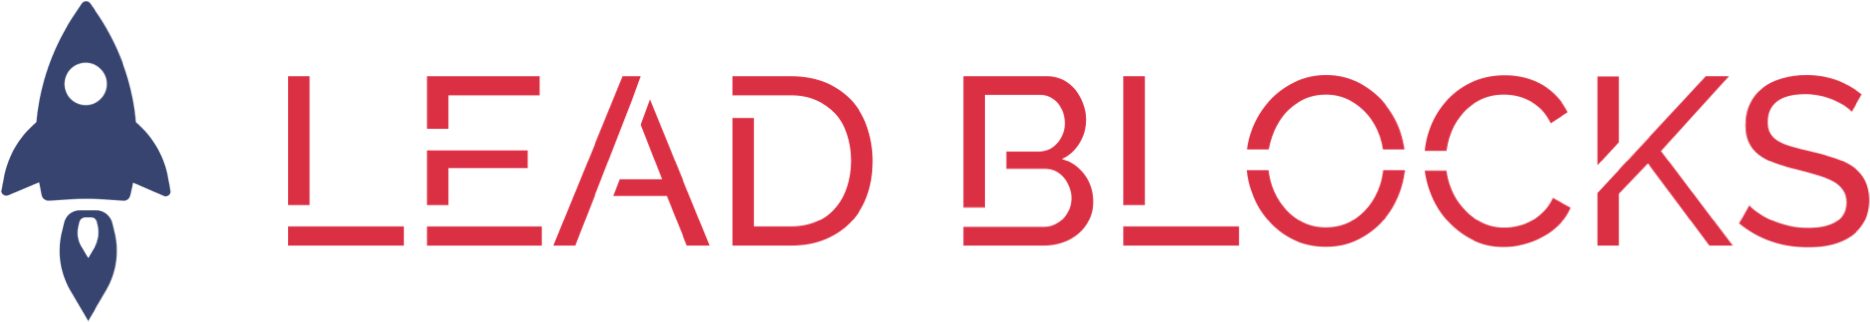 Leadblocks logo horizontal